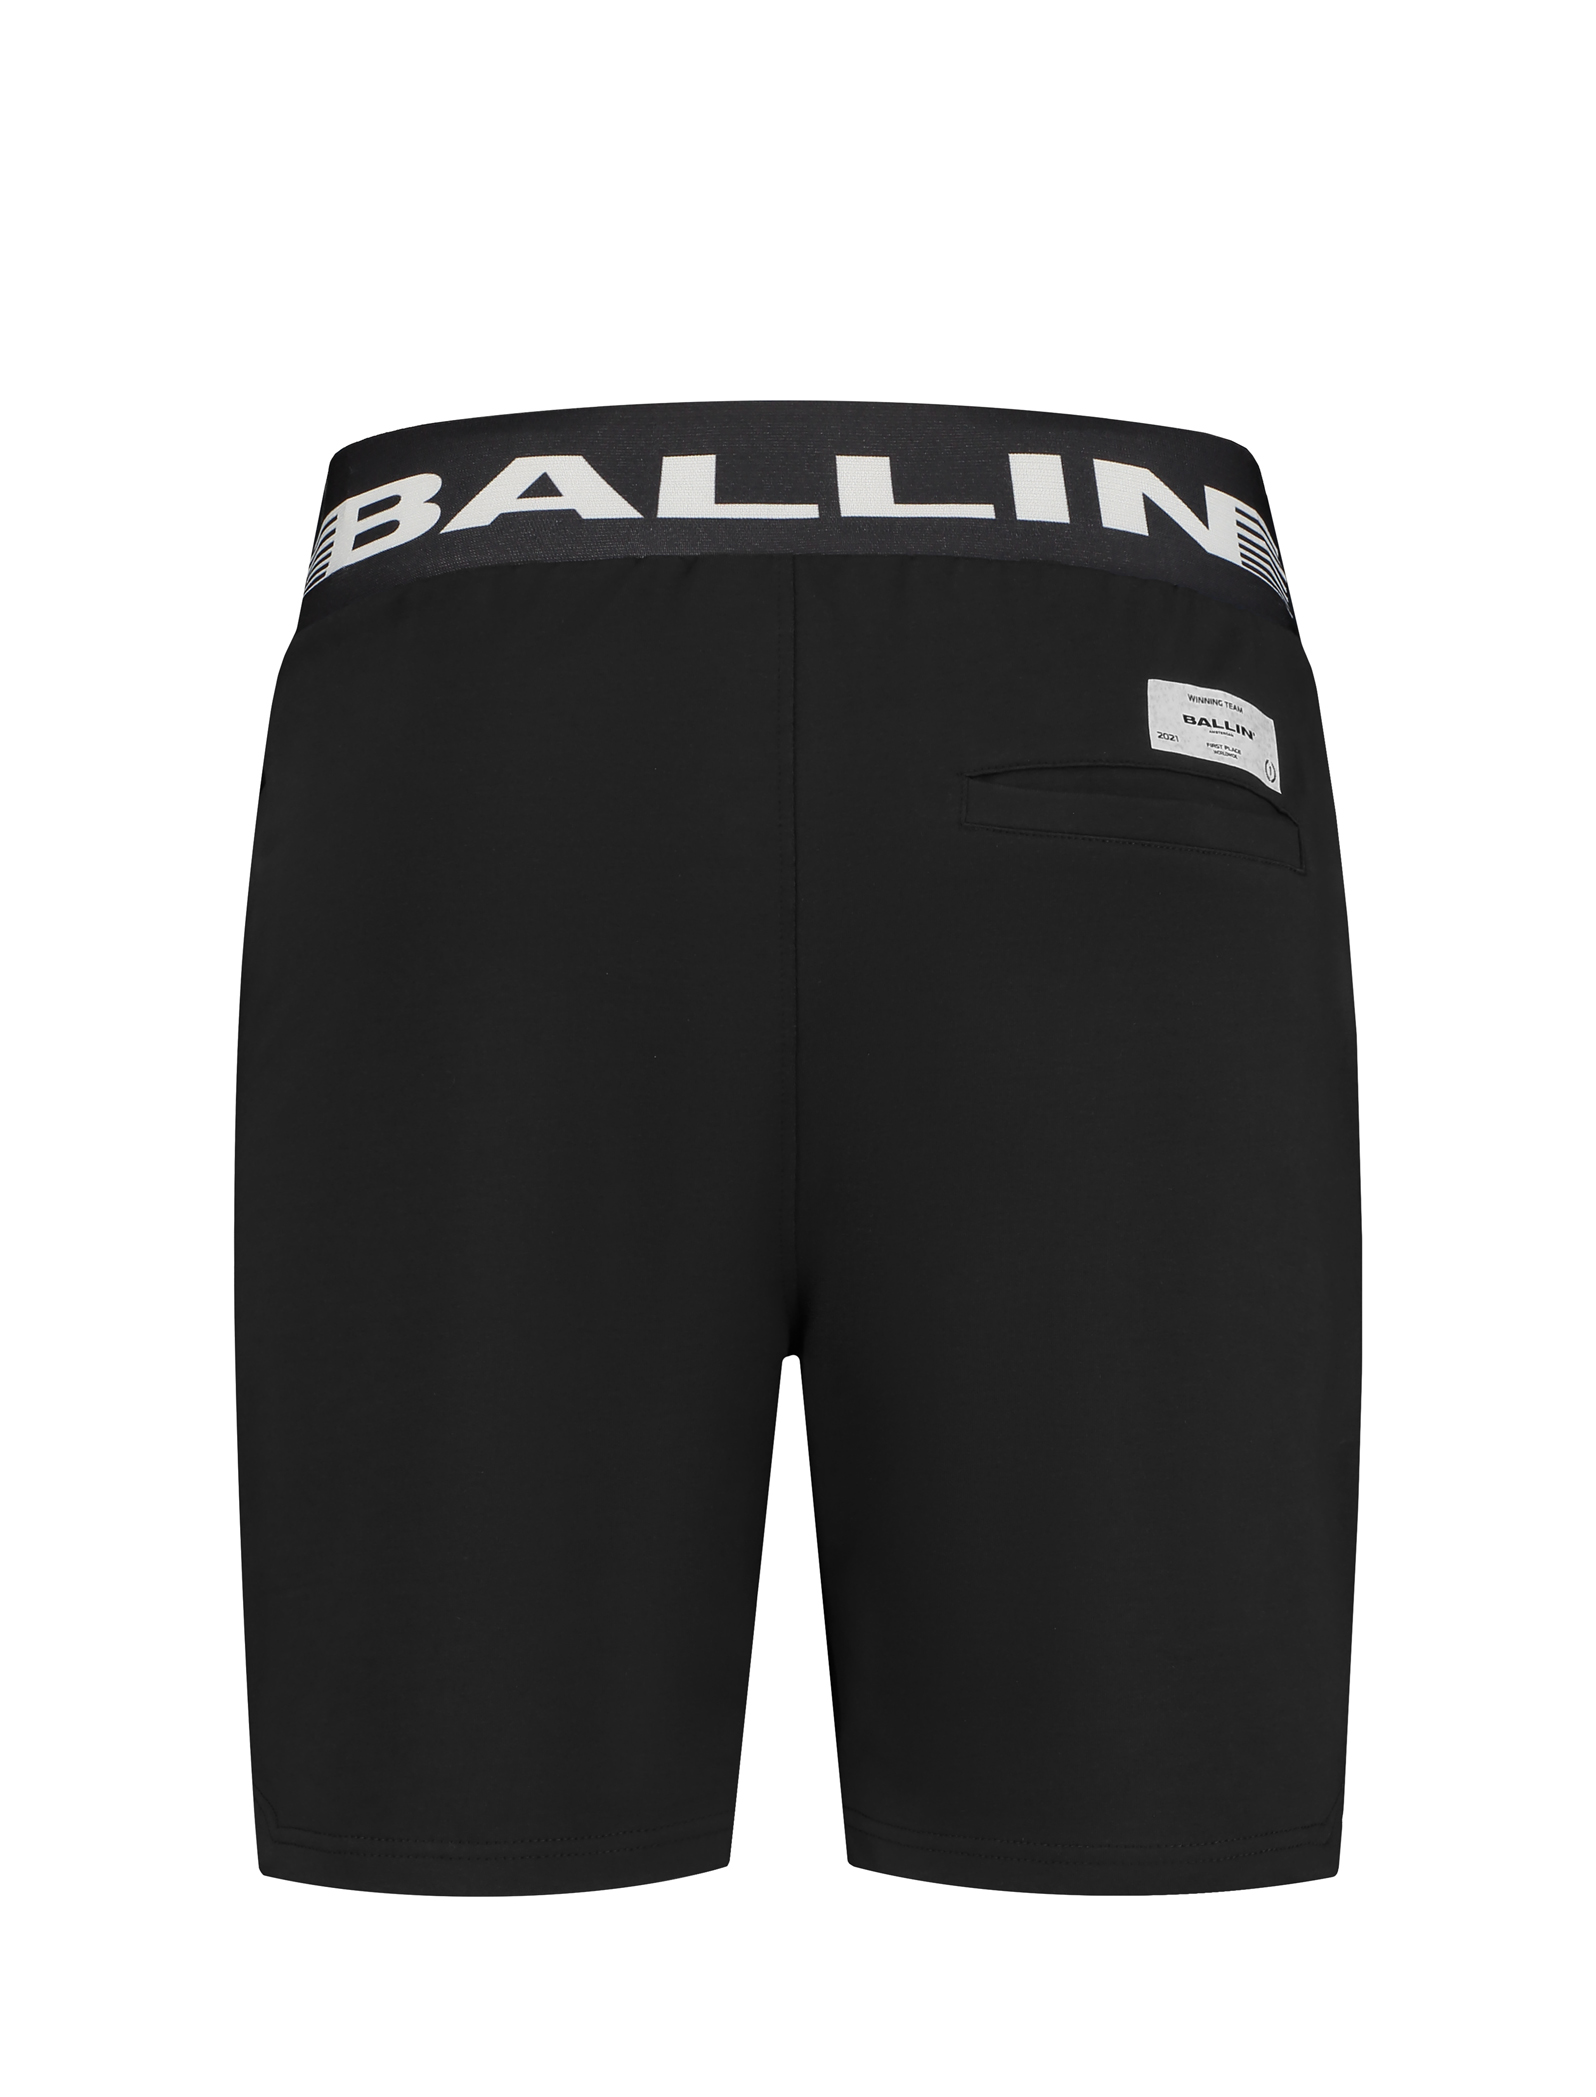 Ballin Short printed on back